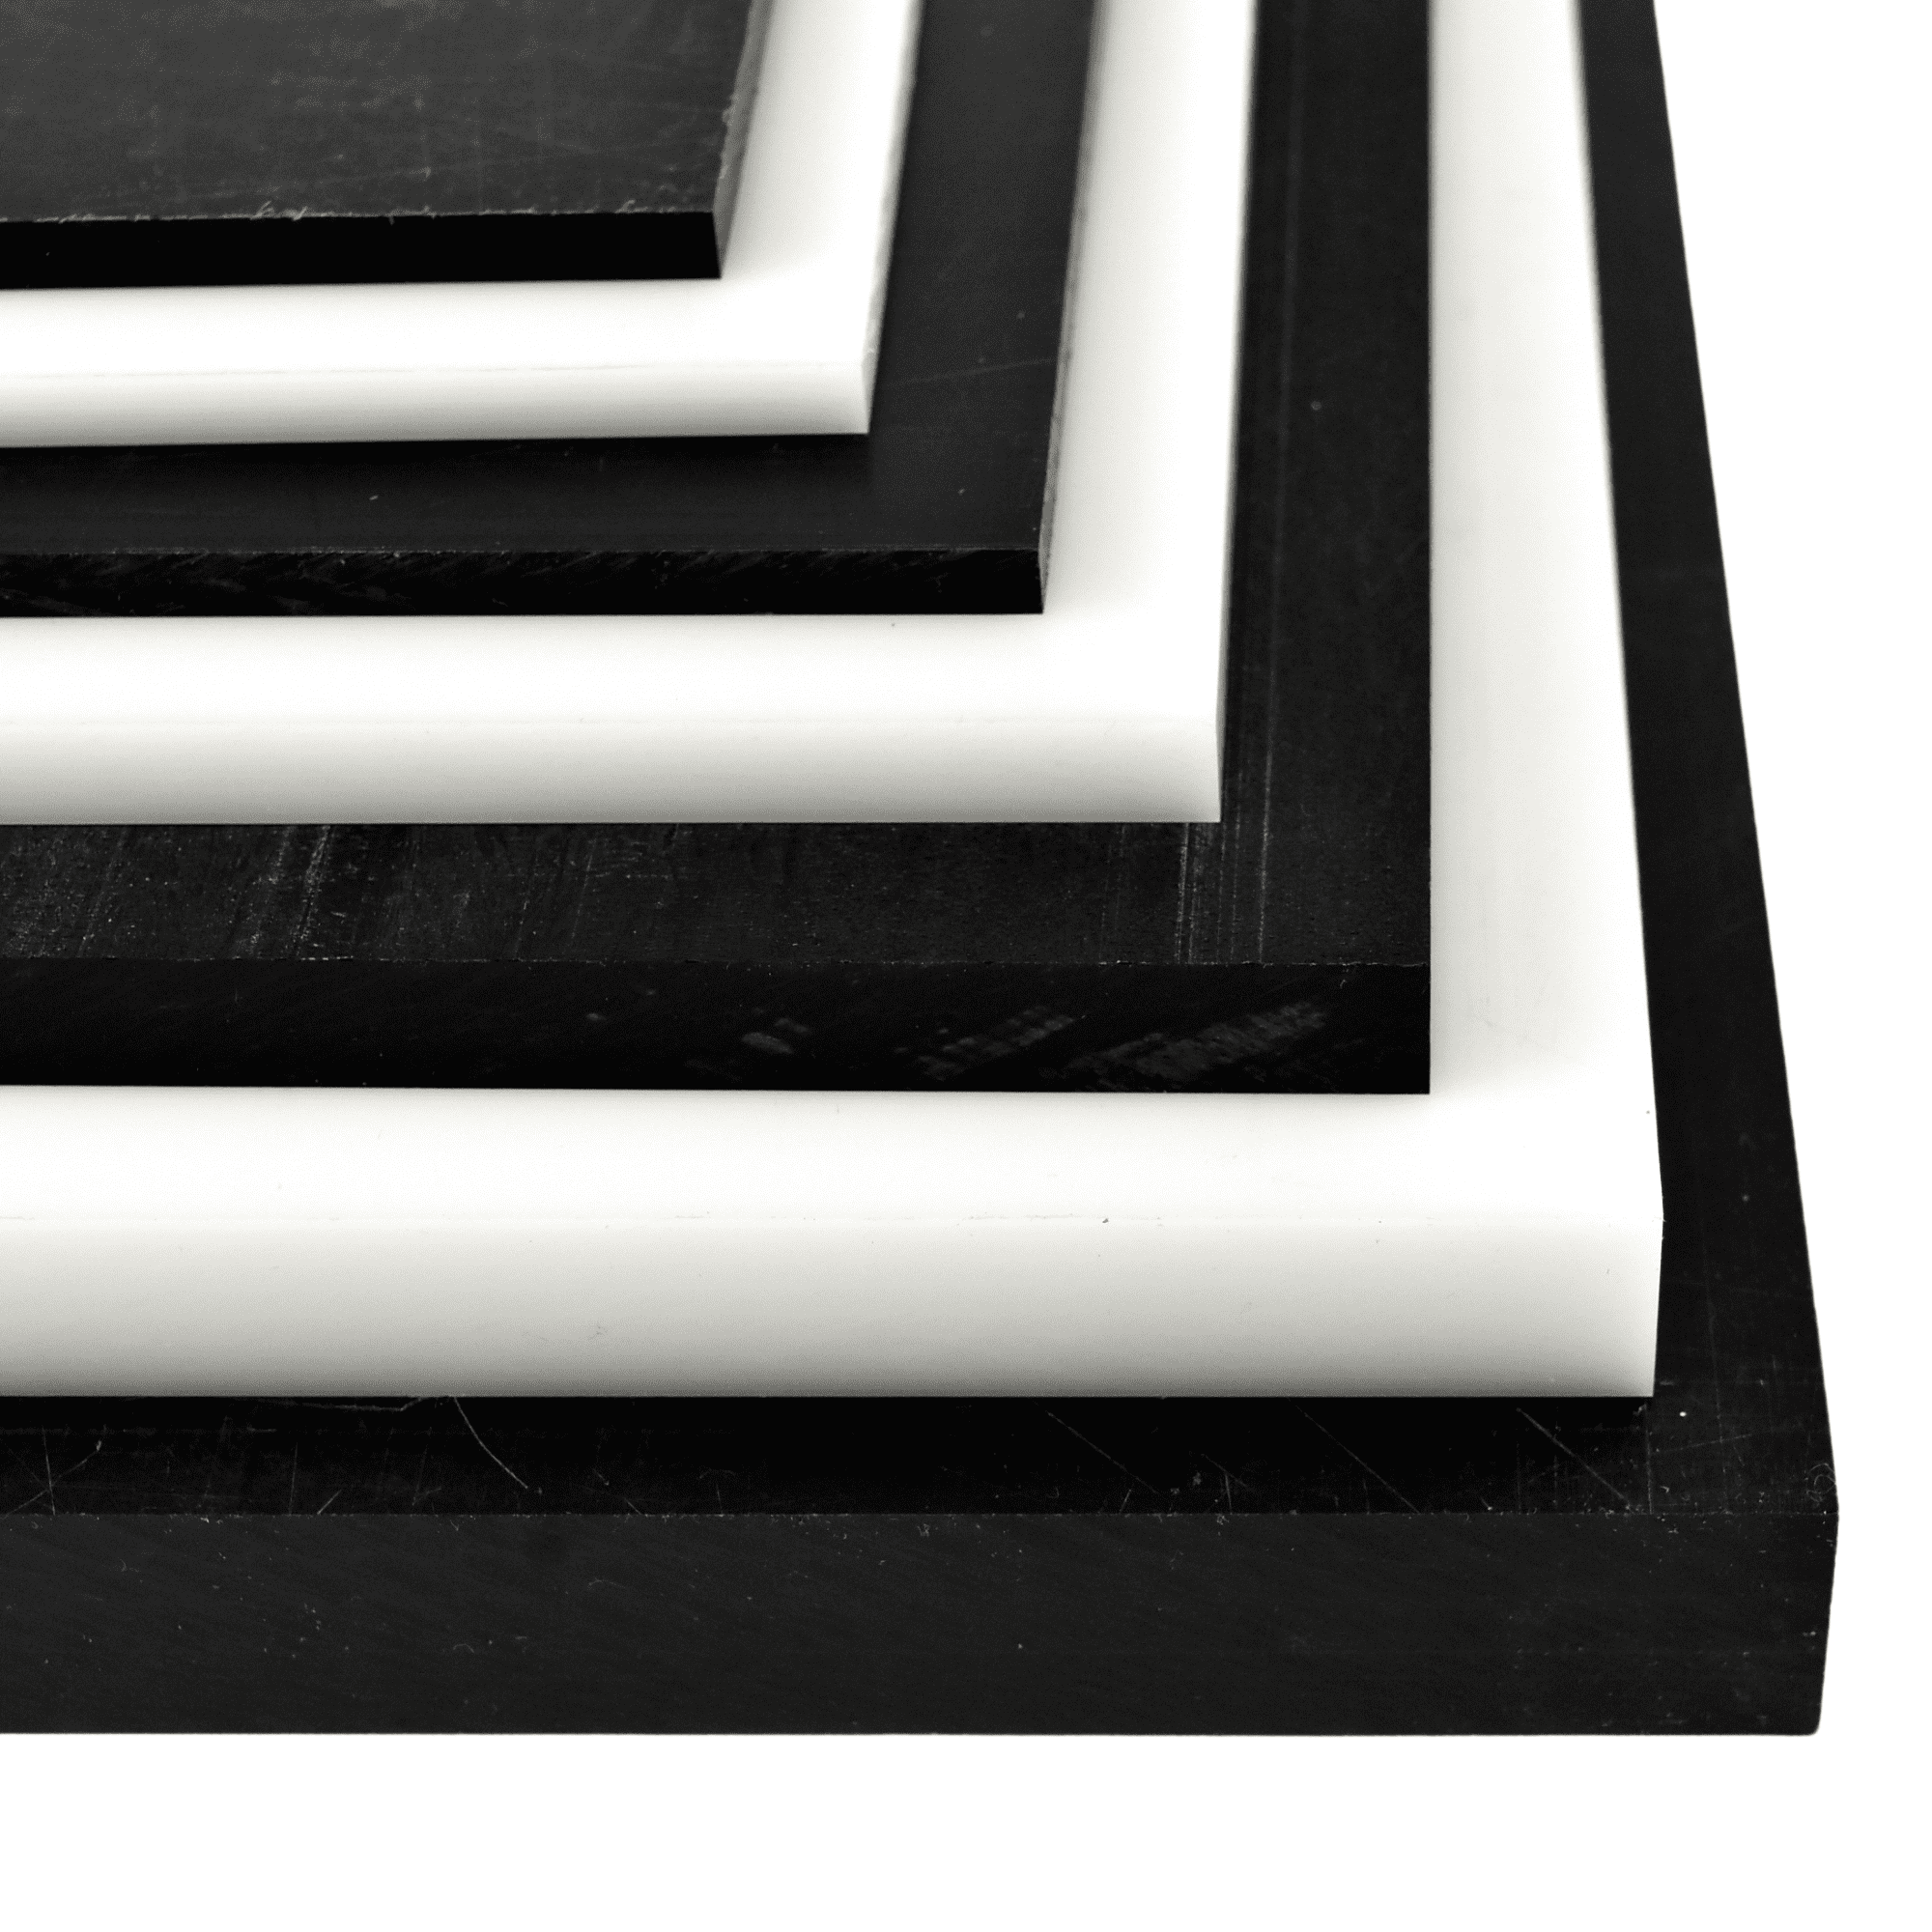 3/8 Thick x 1-1/4 Wide x 12 Long Black Acetal Plastic Bar